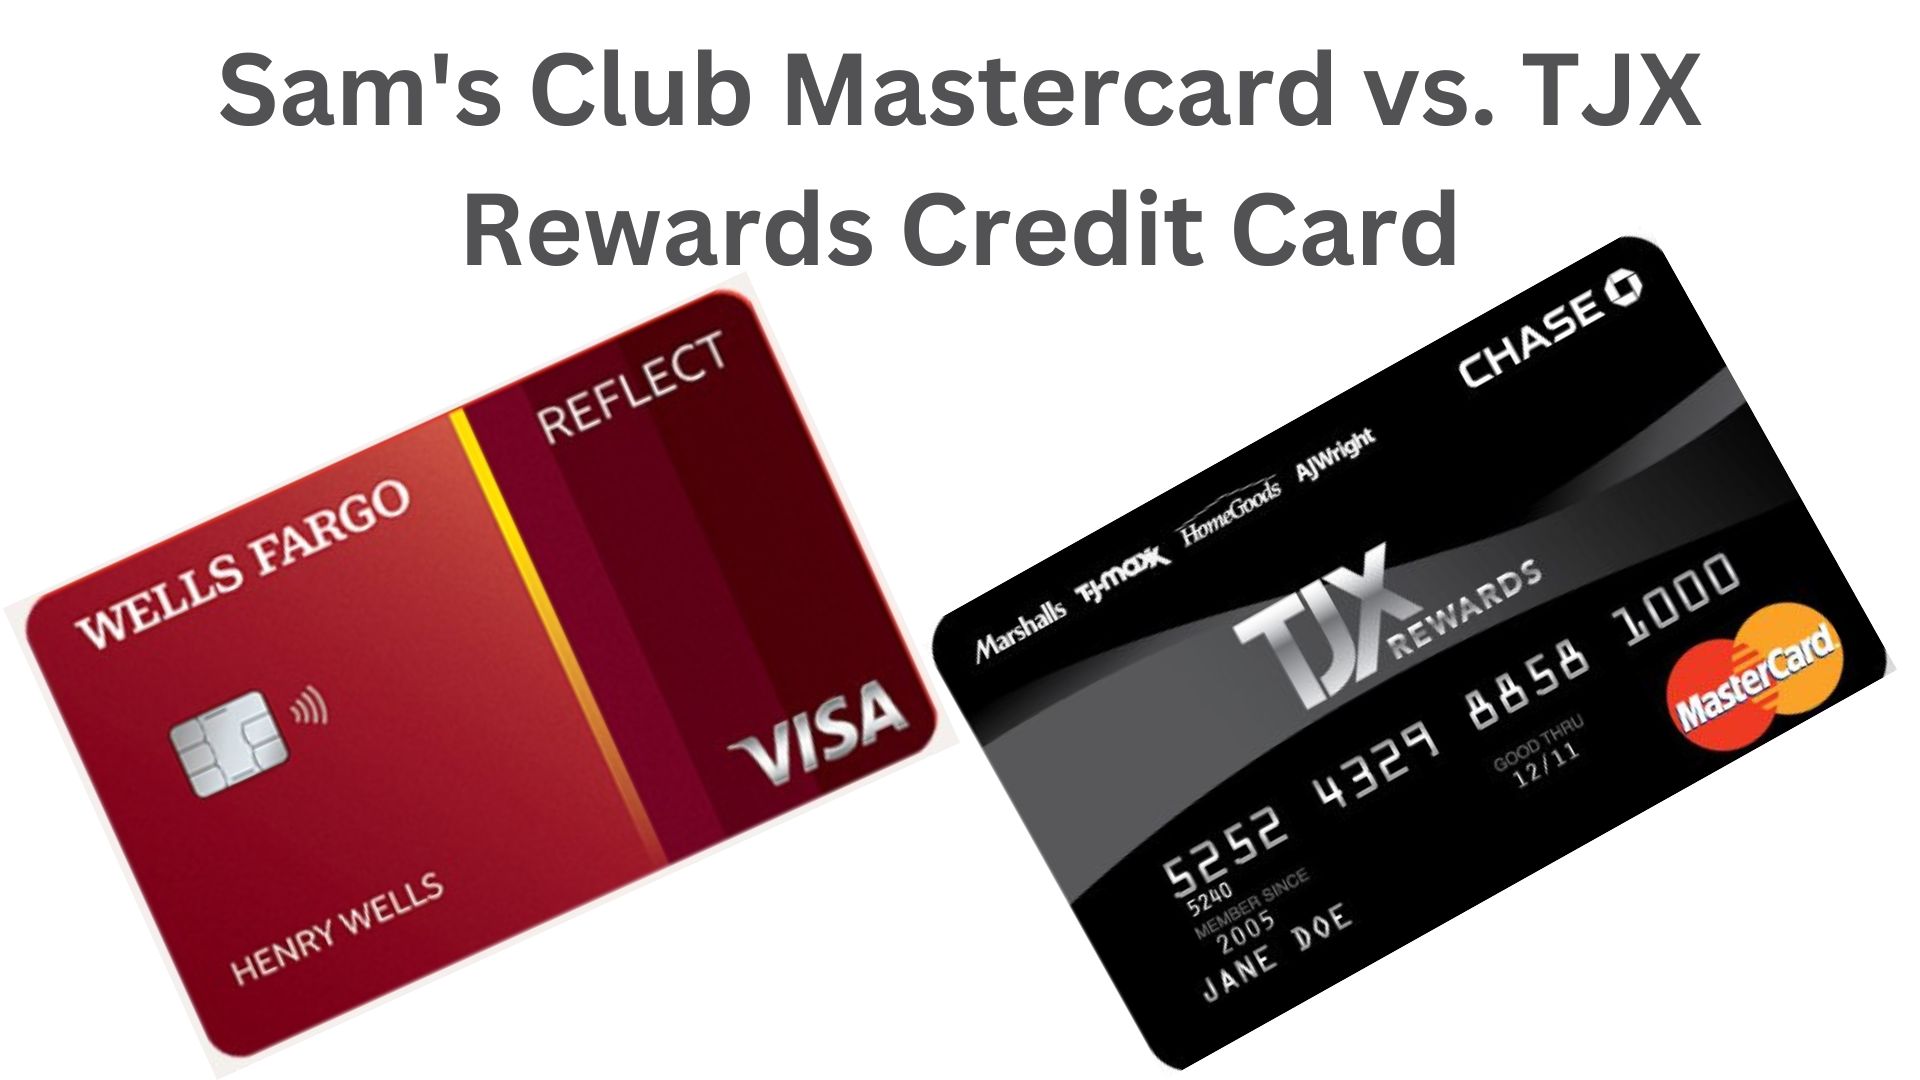 Sam's Club Mastercard vs. TJX Rewards Credit Card